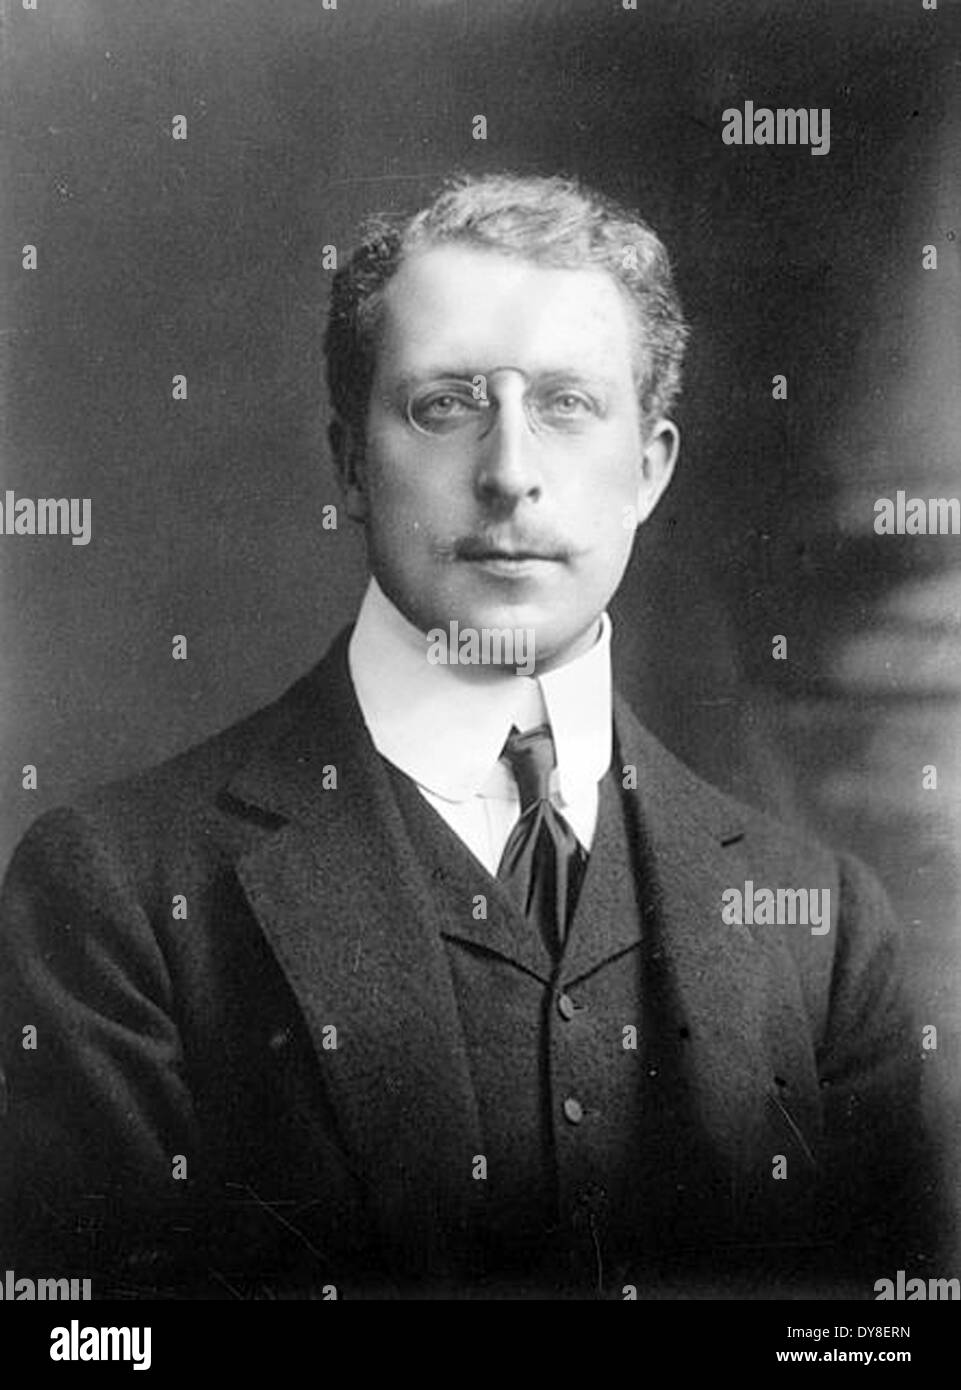 ALBERT I OF BELGIUM (1875-1934) in April 1910 Stock Photo